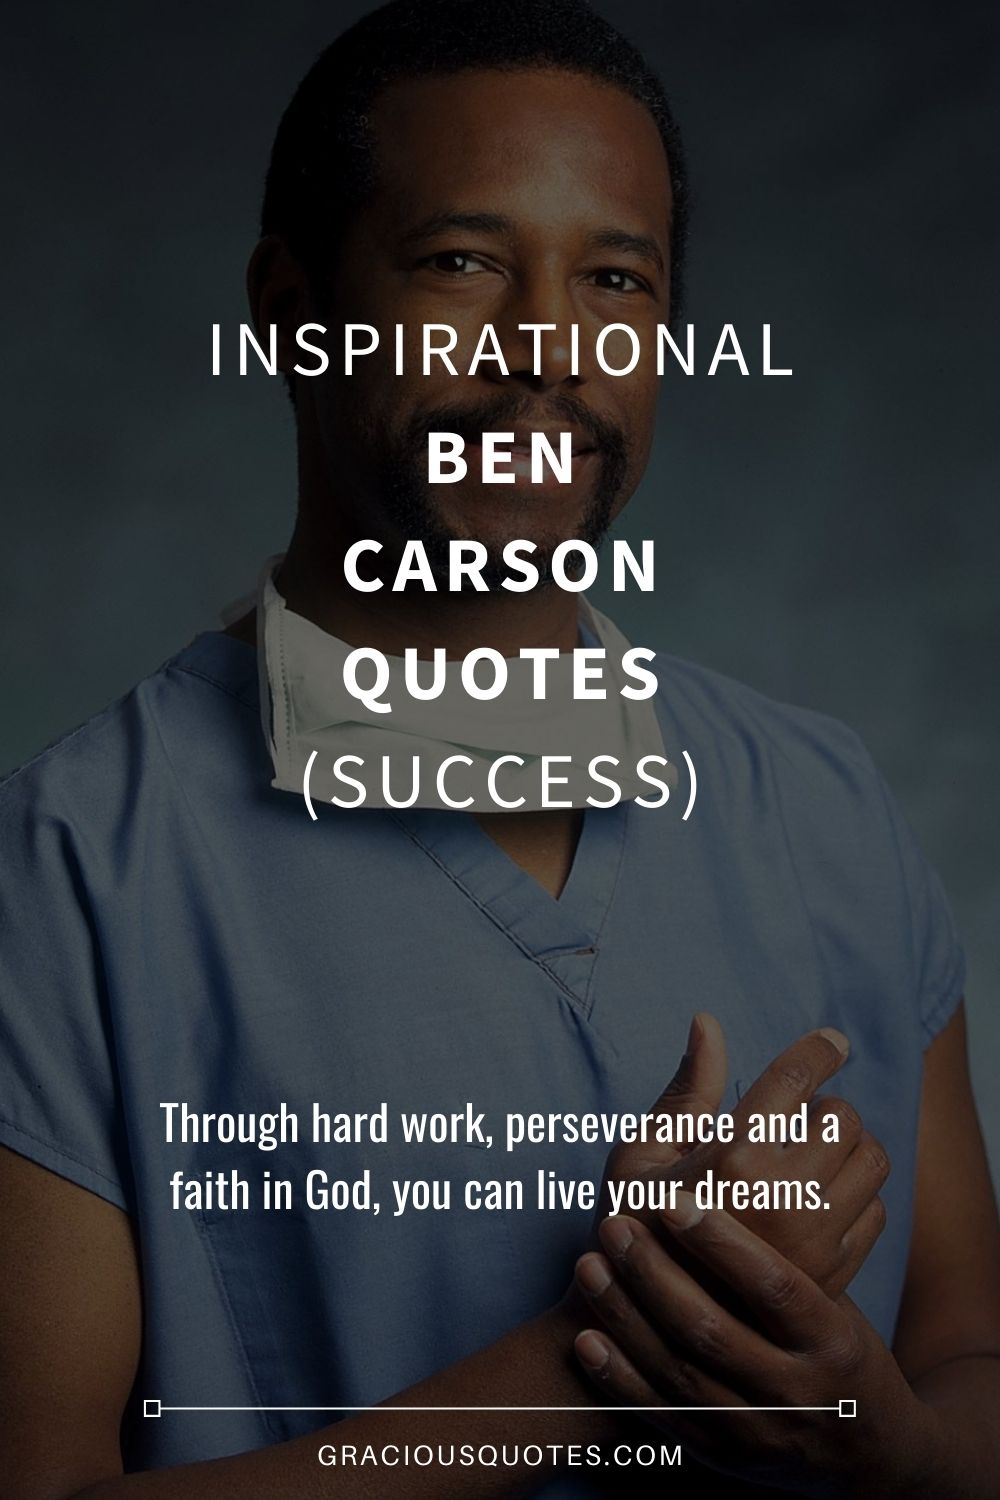 Inspirational Ben Carson Quotes (SUCCESS) - Gracious Quotes